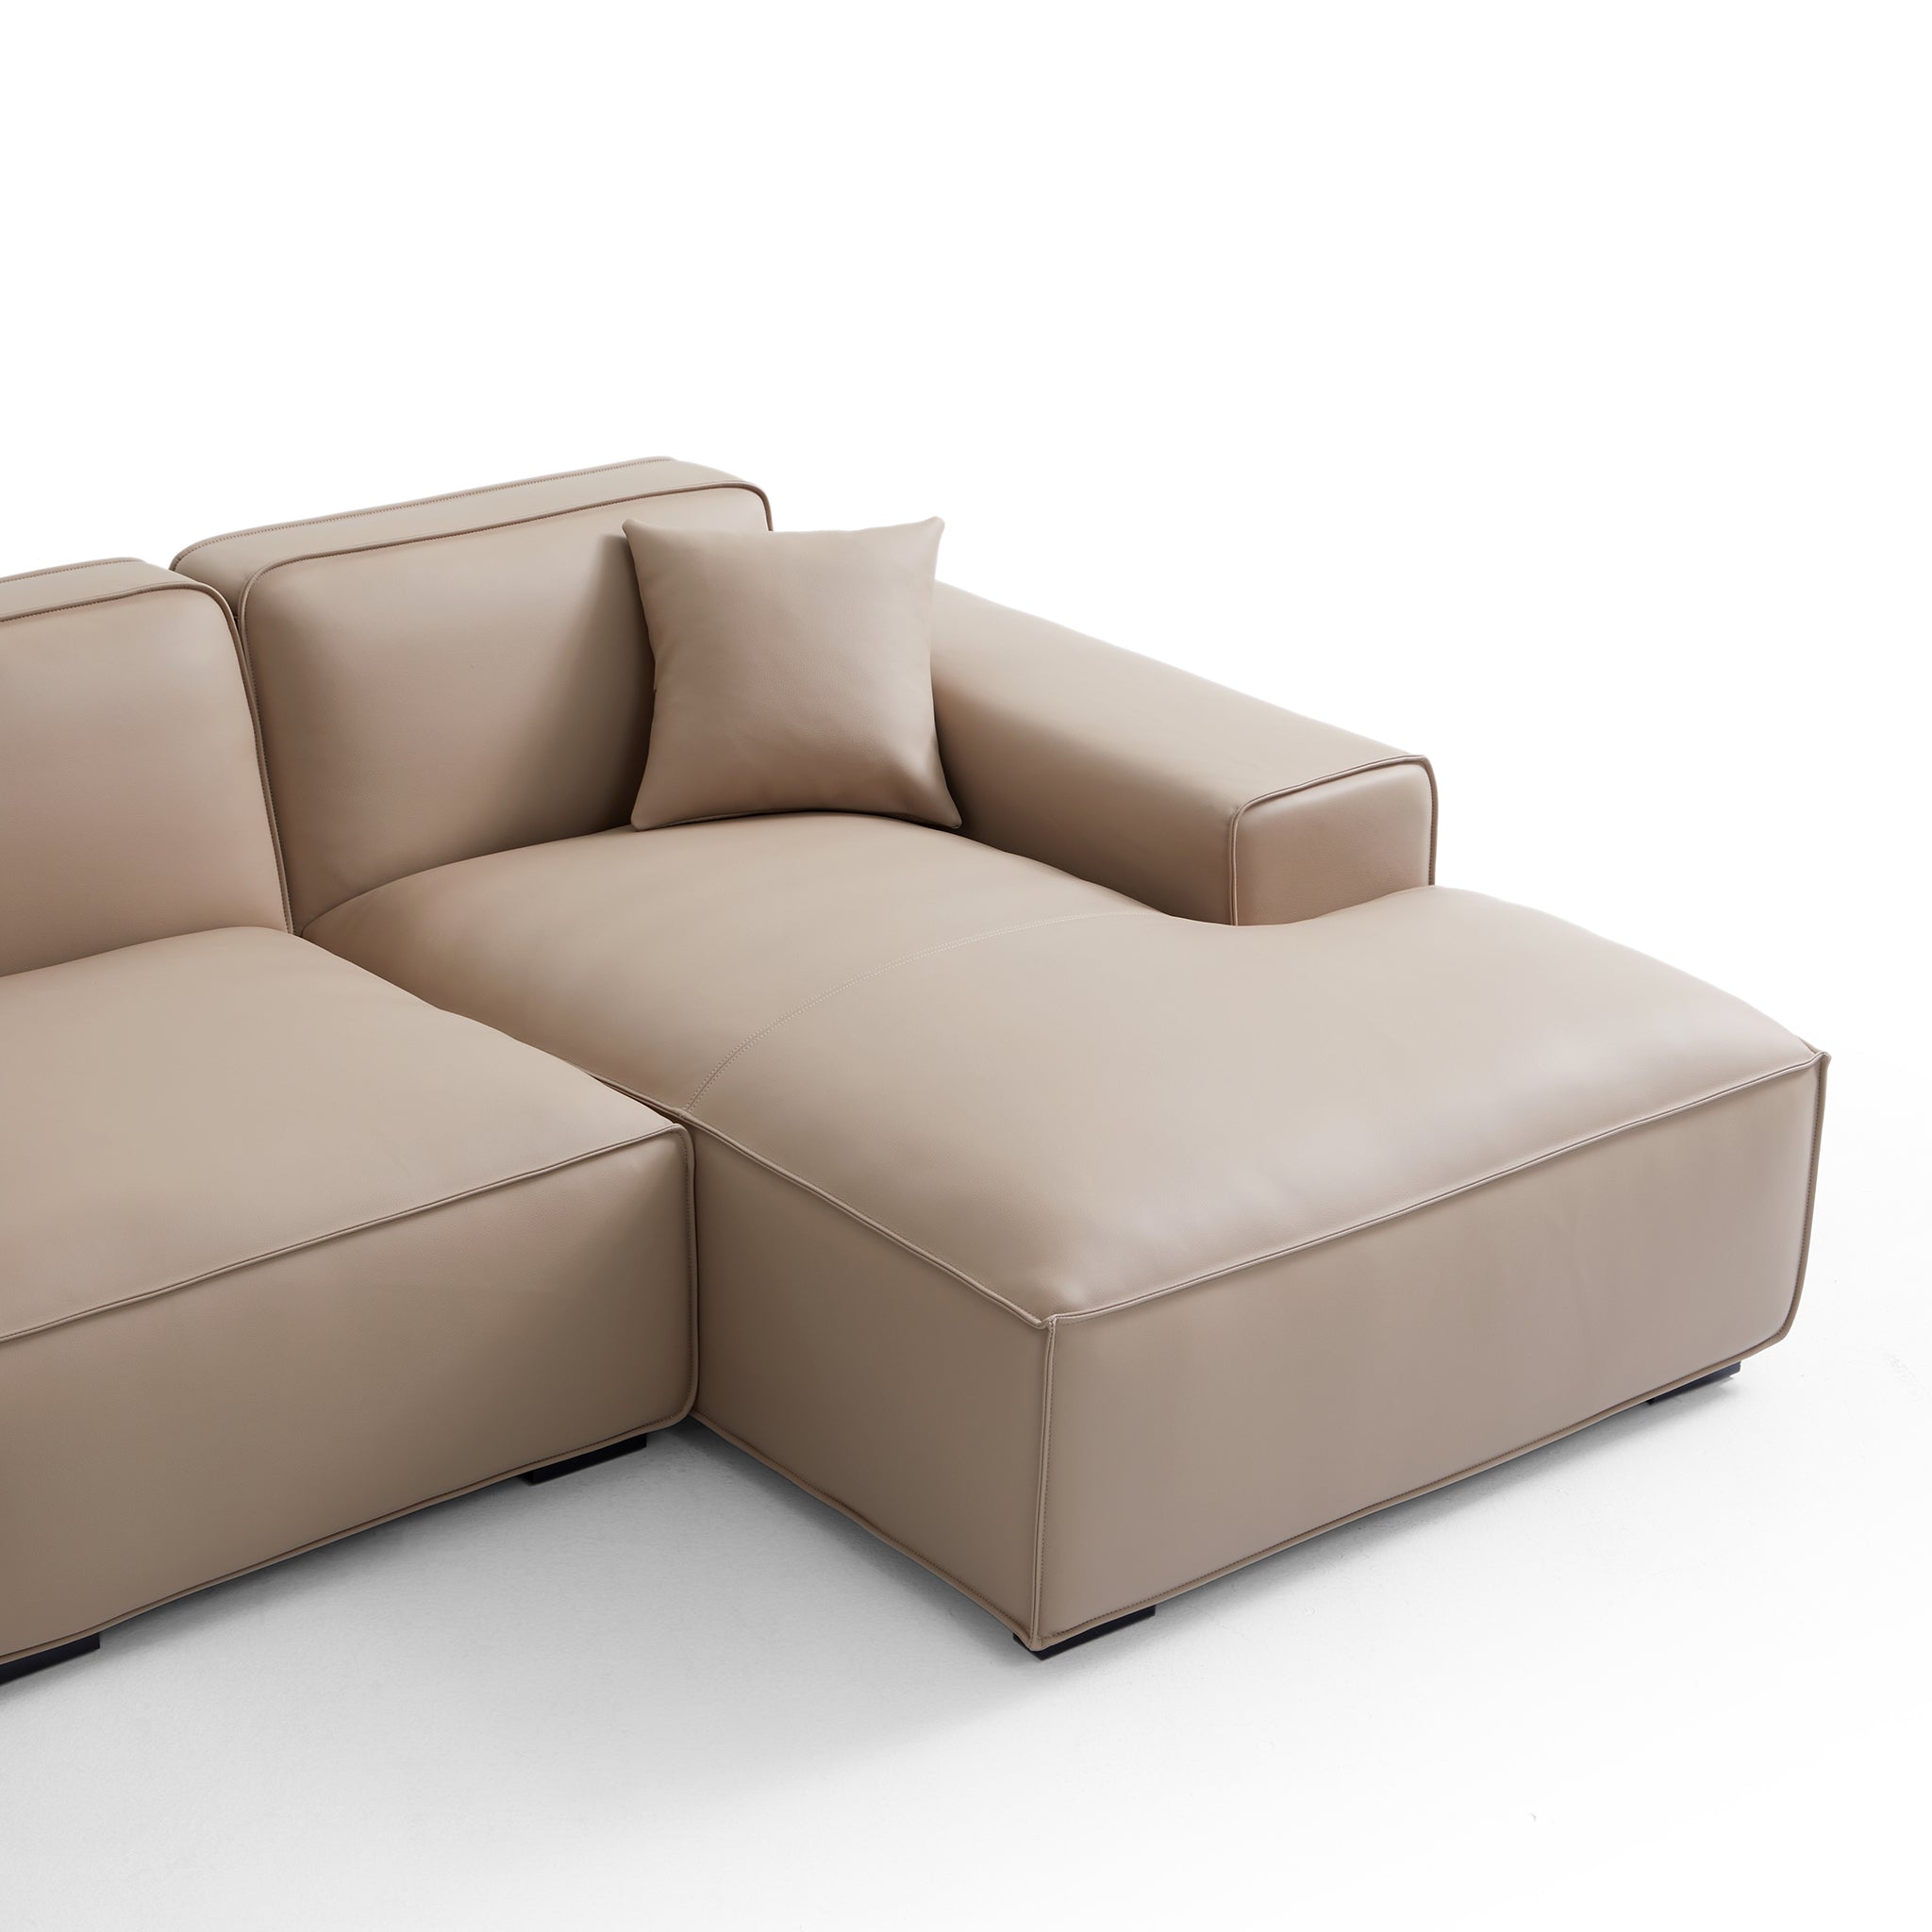 Domus Modular Khaki Leather Sectional Sofa